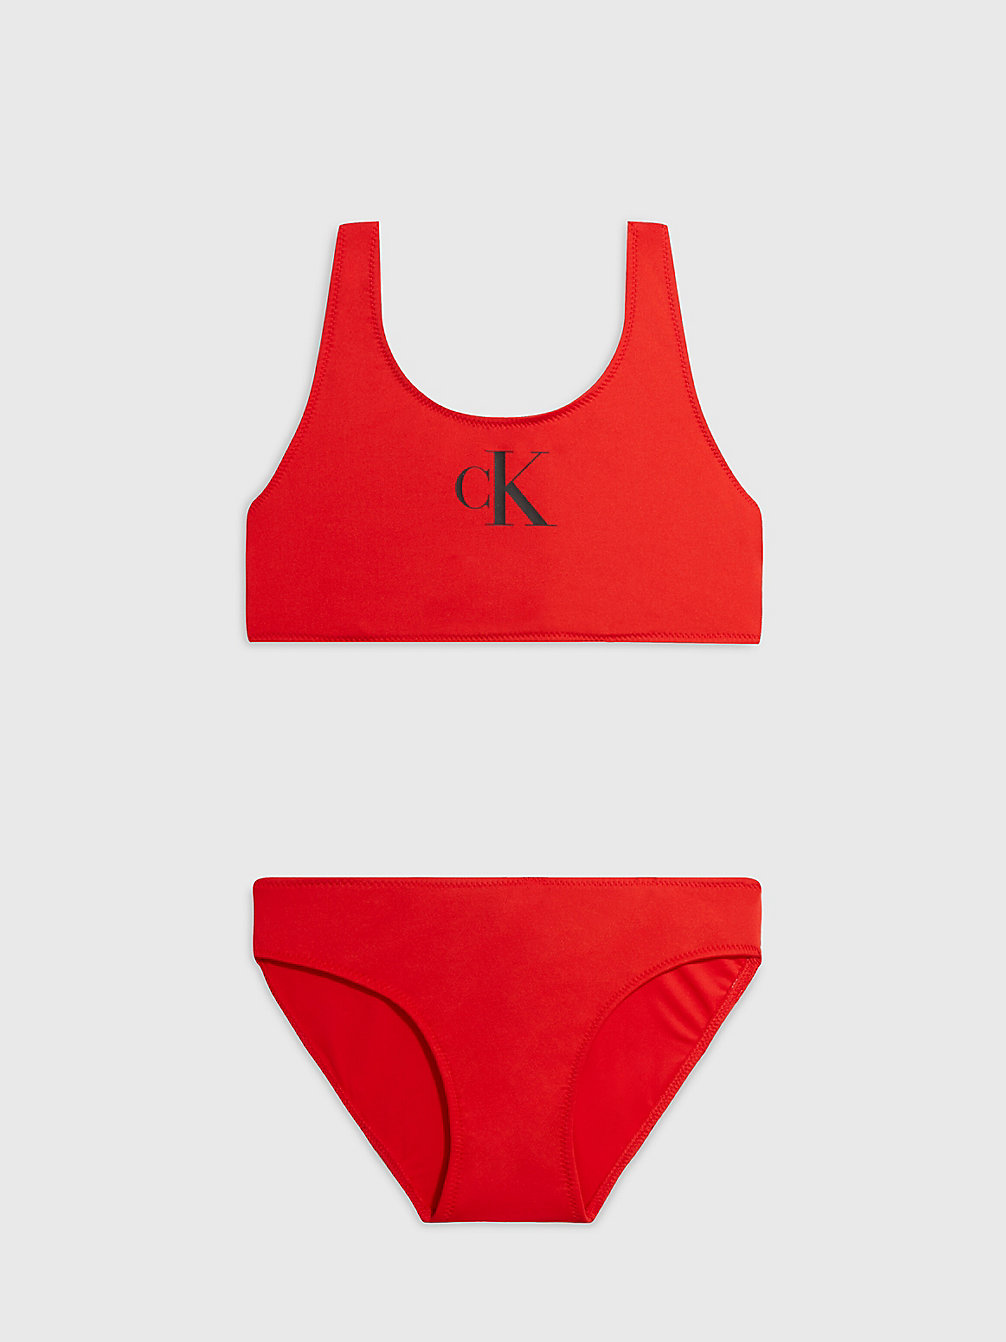 CAJUN RED Ensemble Bikini Brassière Pour Fille - CK Monogram undefined girls Calvin Klein